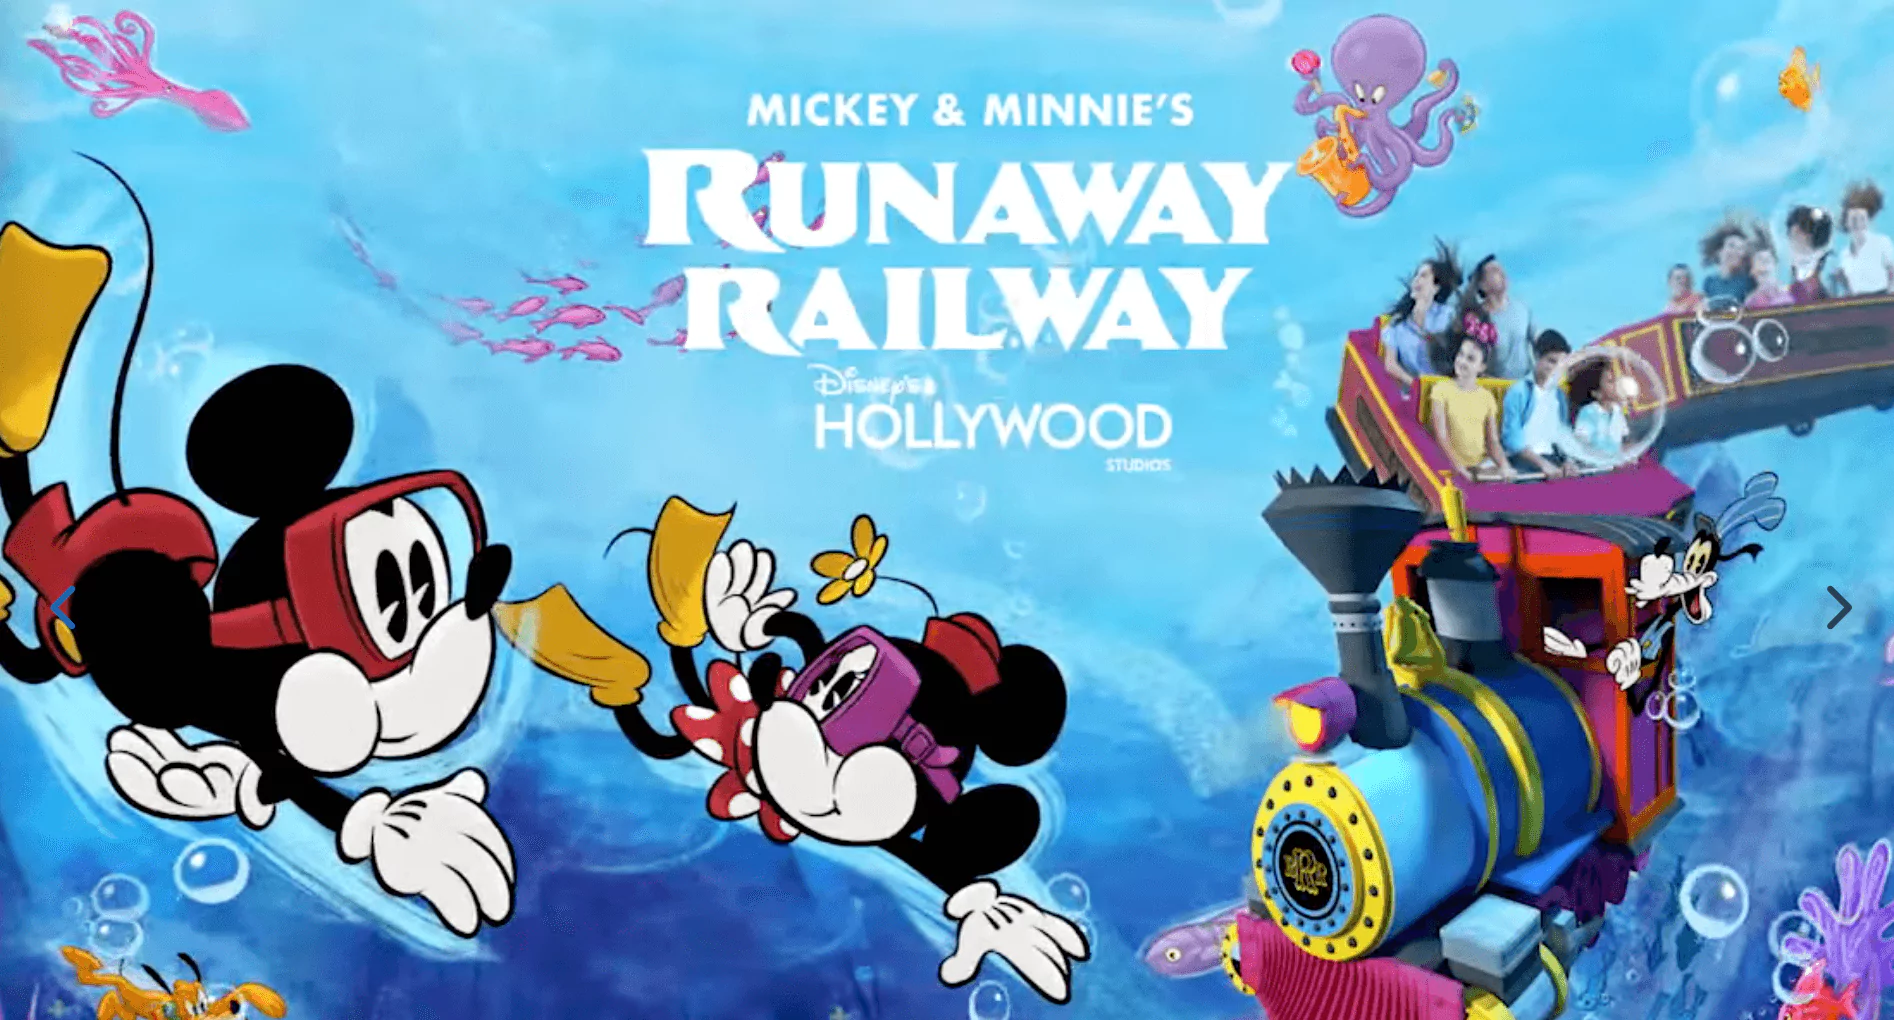 Minnie and Mickeys Runaway Railway